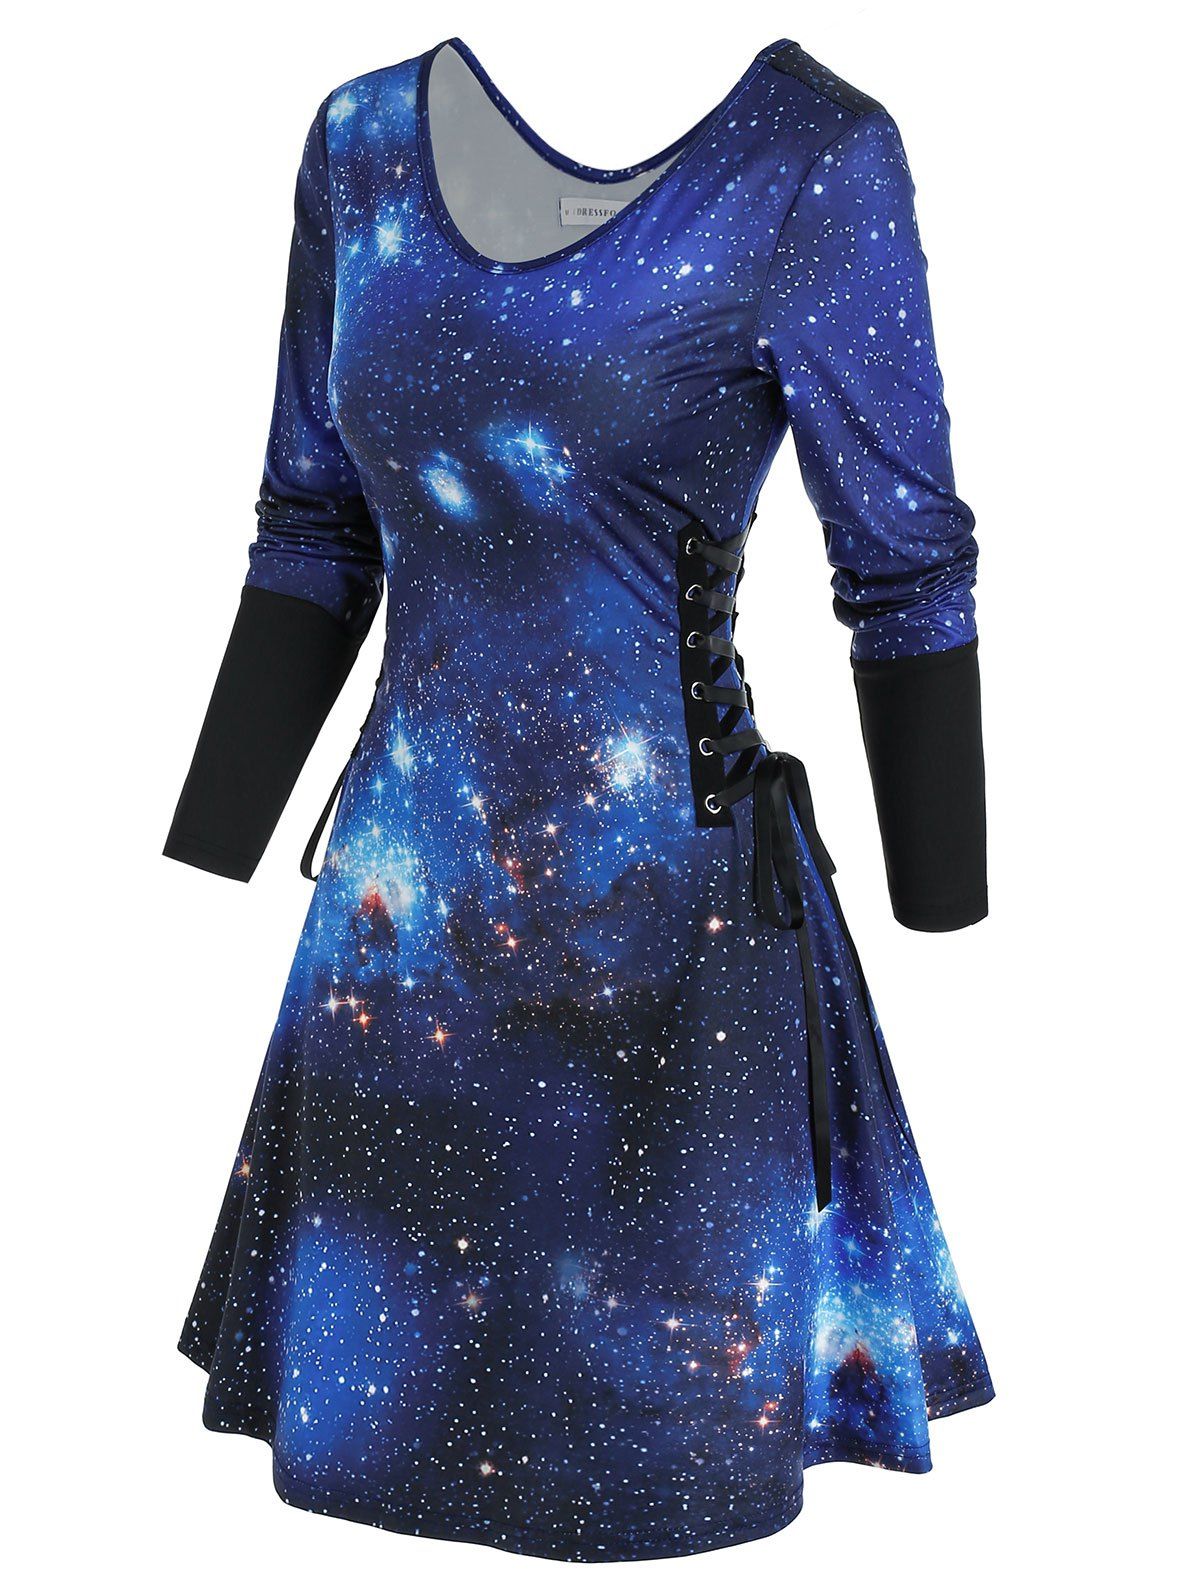 Galaxy Print Lace Up A Line Long Sleeve Dress - BLACK XL